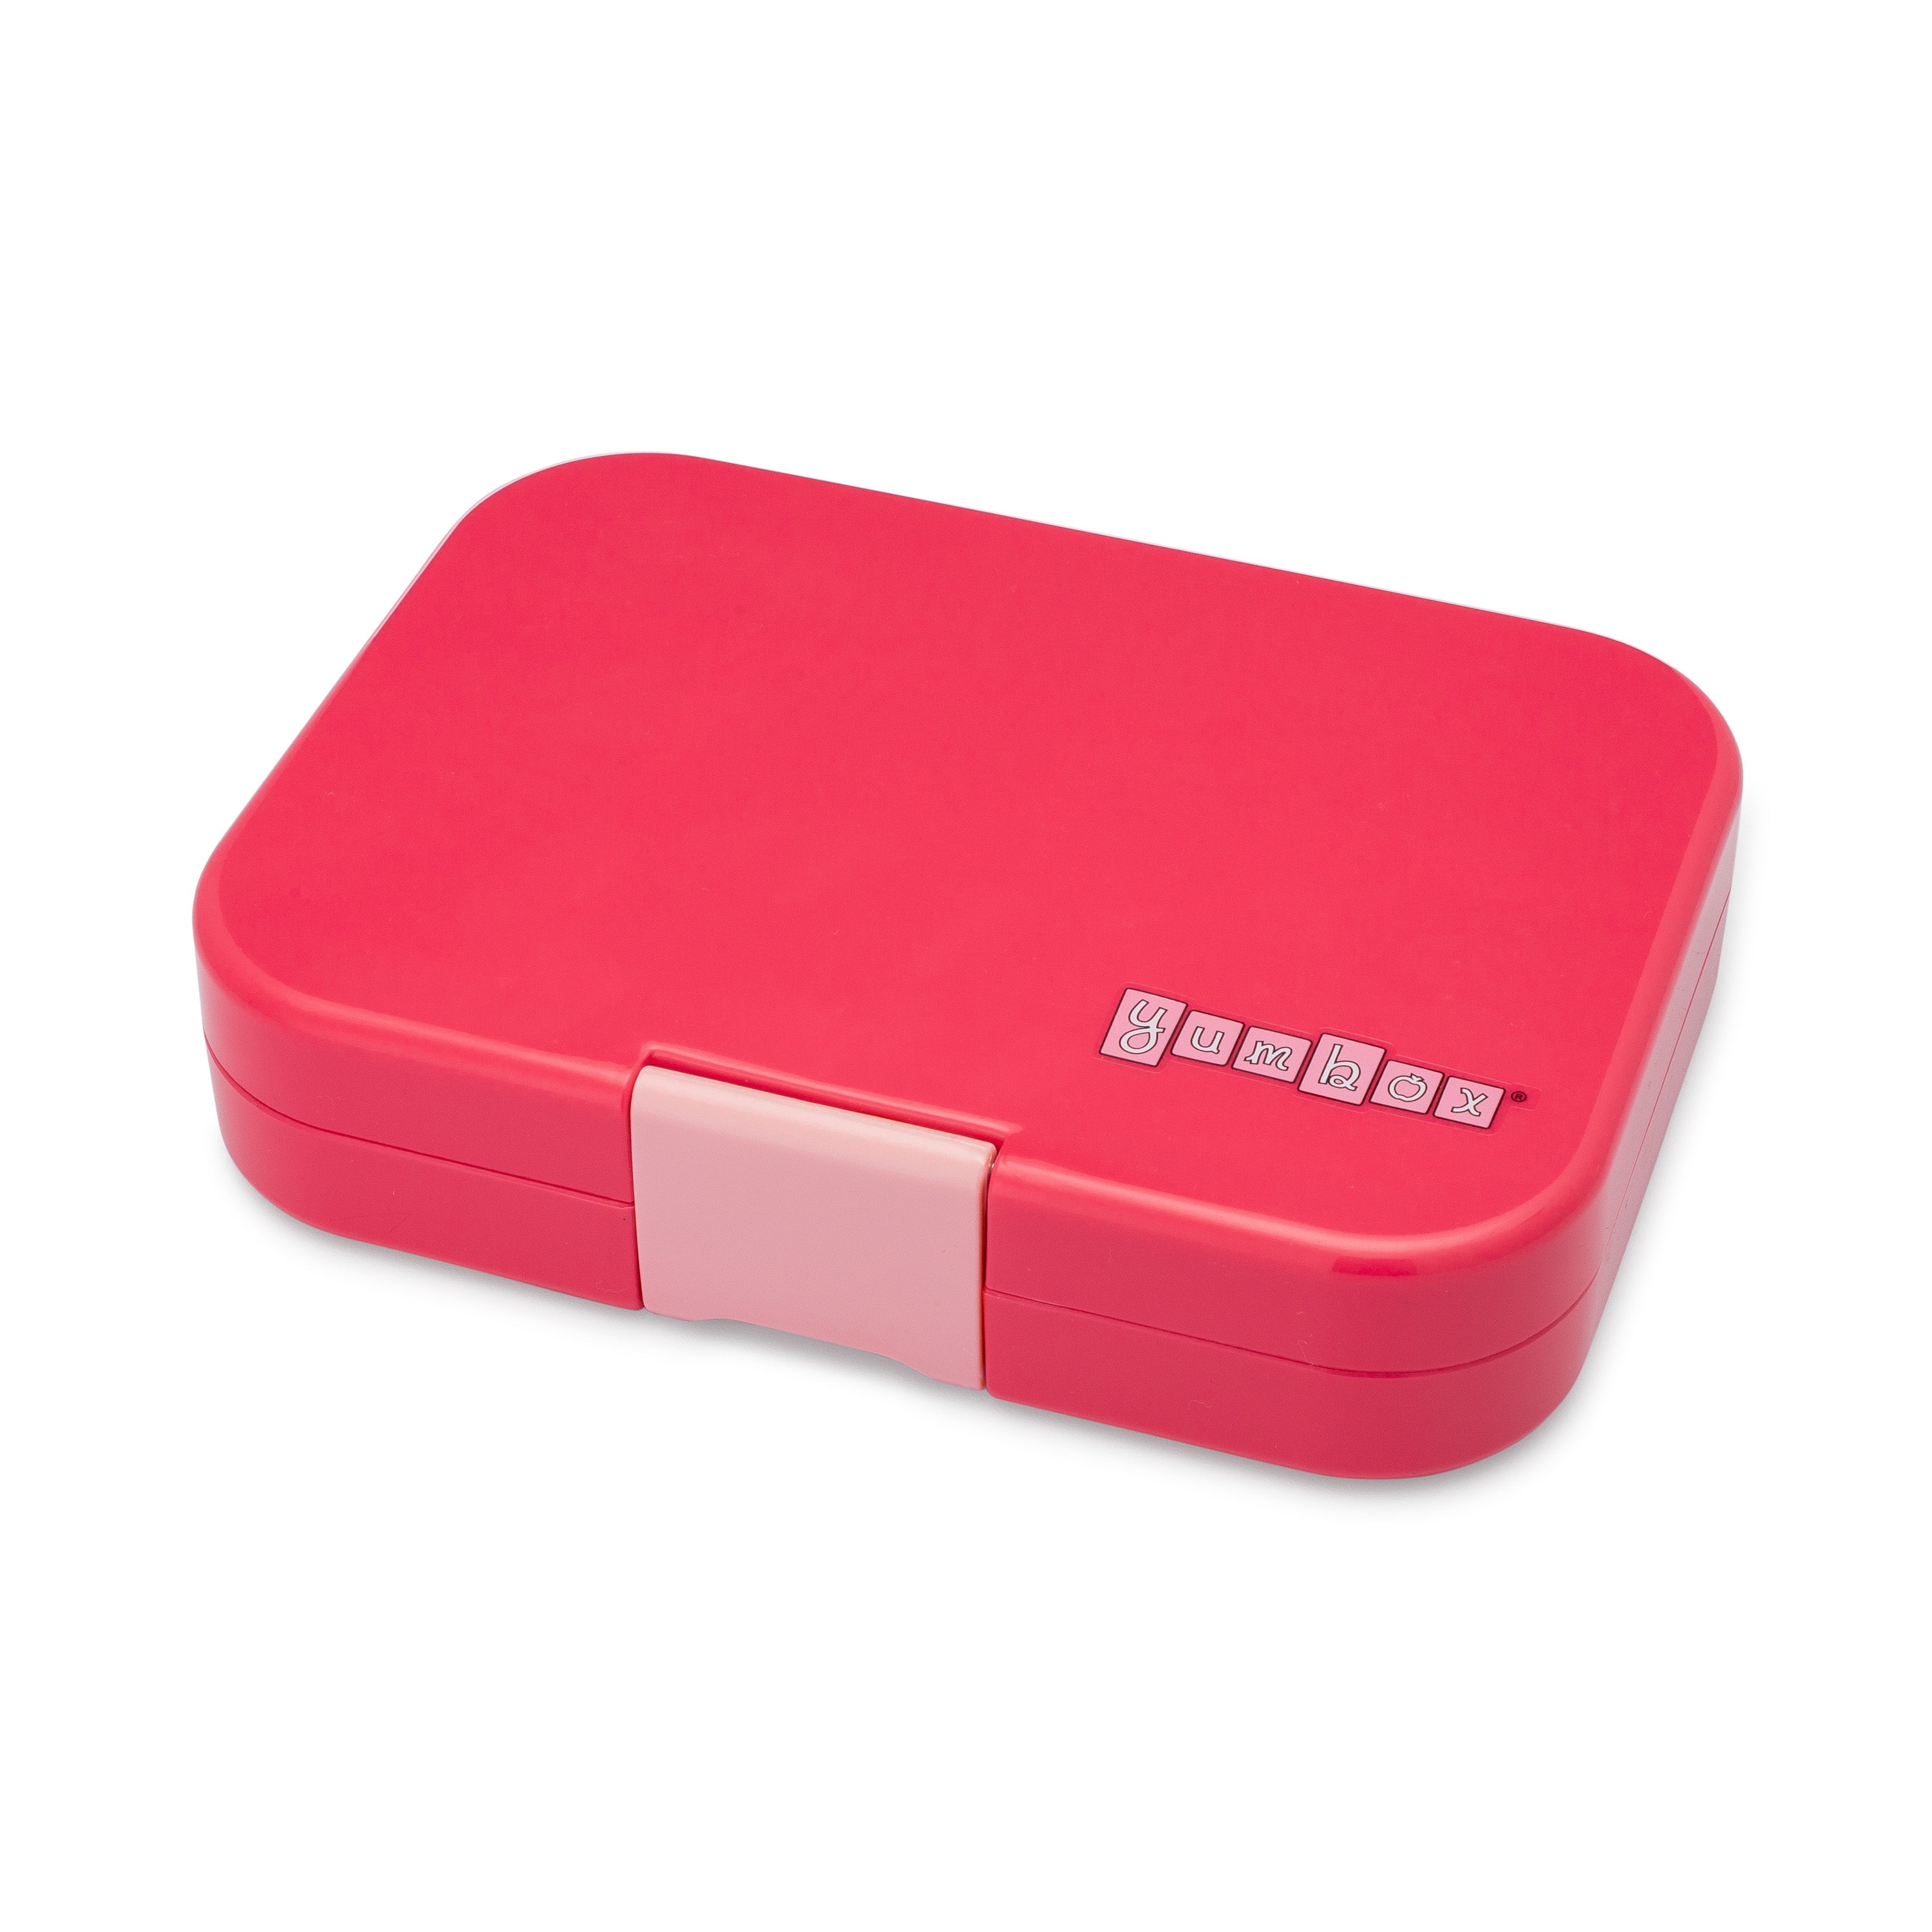 yumbox-original-lotus-pink-6-compartment-lunch-box- (1)